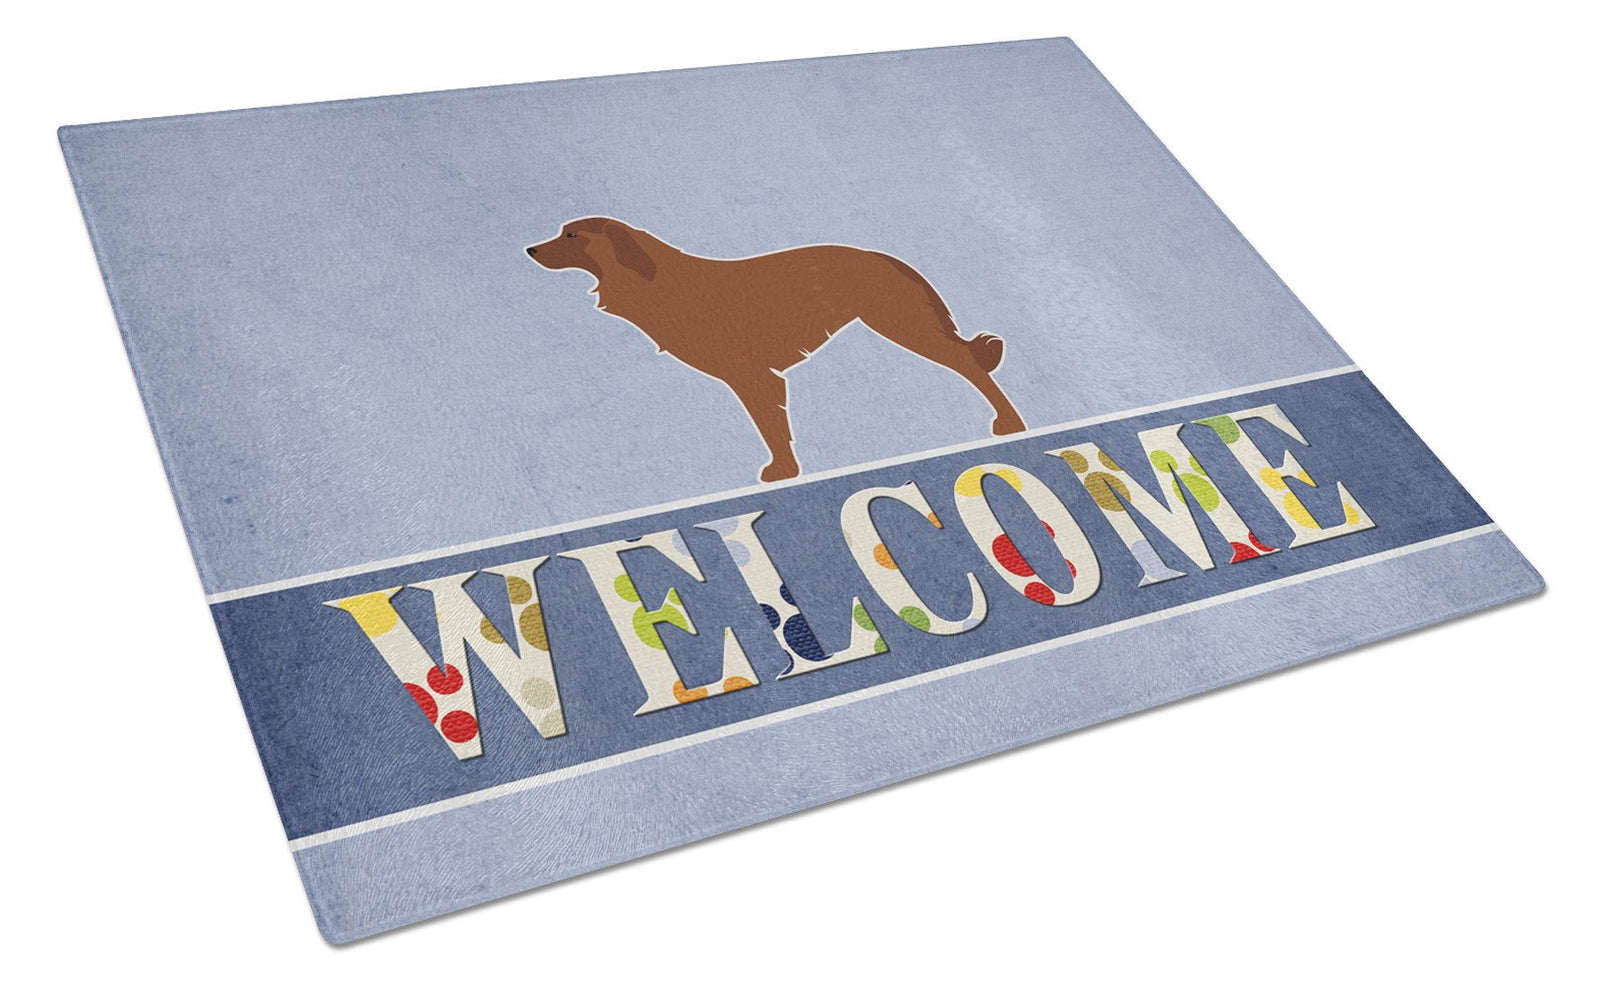 Portuguese Sheepdog Dog Welcome Glass Cutting Board Large BB5535LCB by Caroline's Treasures